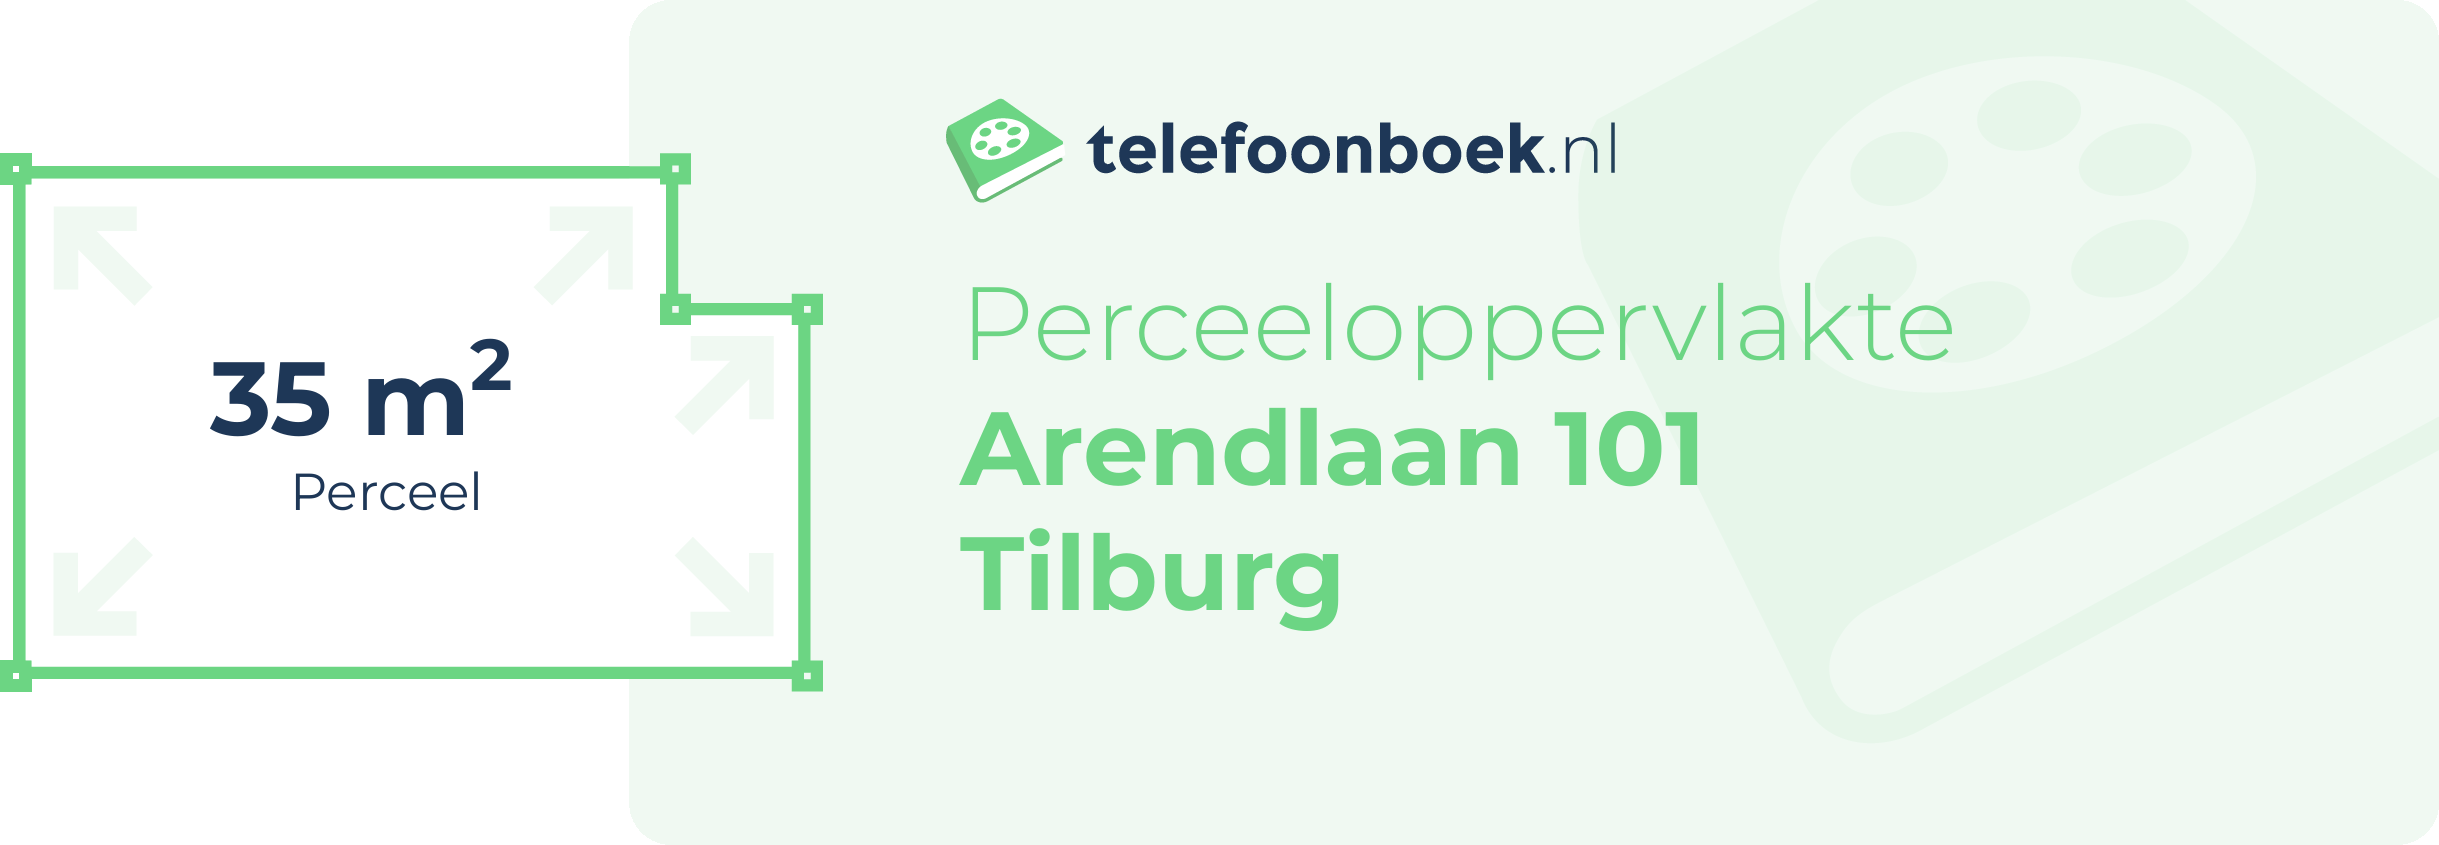 Perceeloppervlakte Arendlaan 101 Tilburg